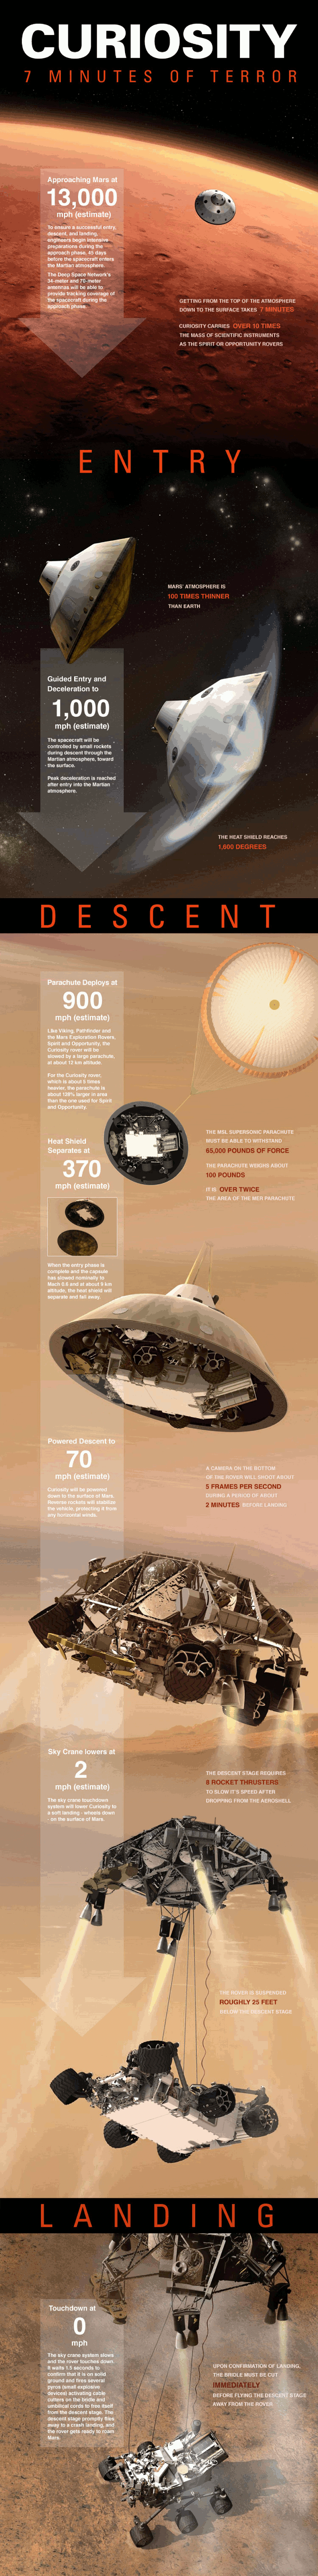 Curiosity Landing on Mars